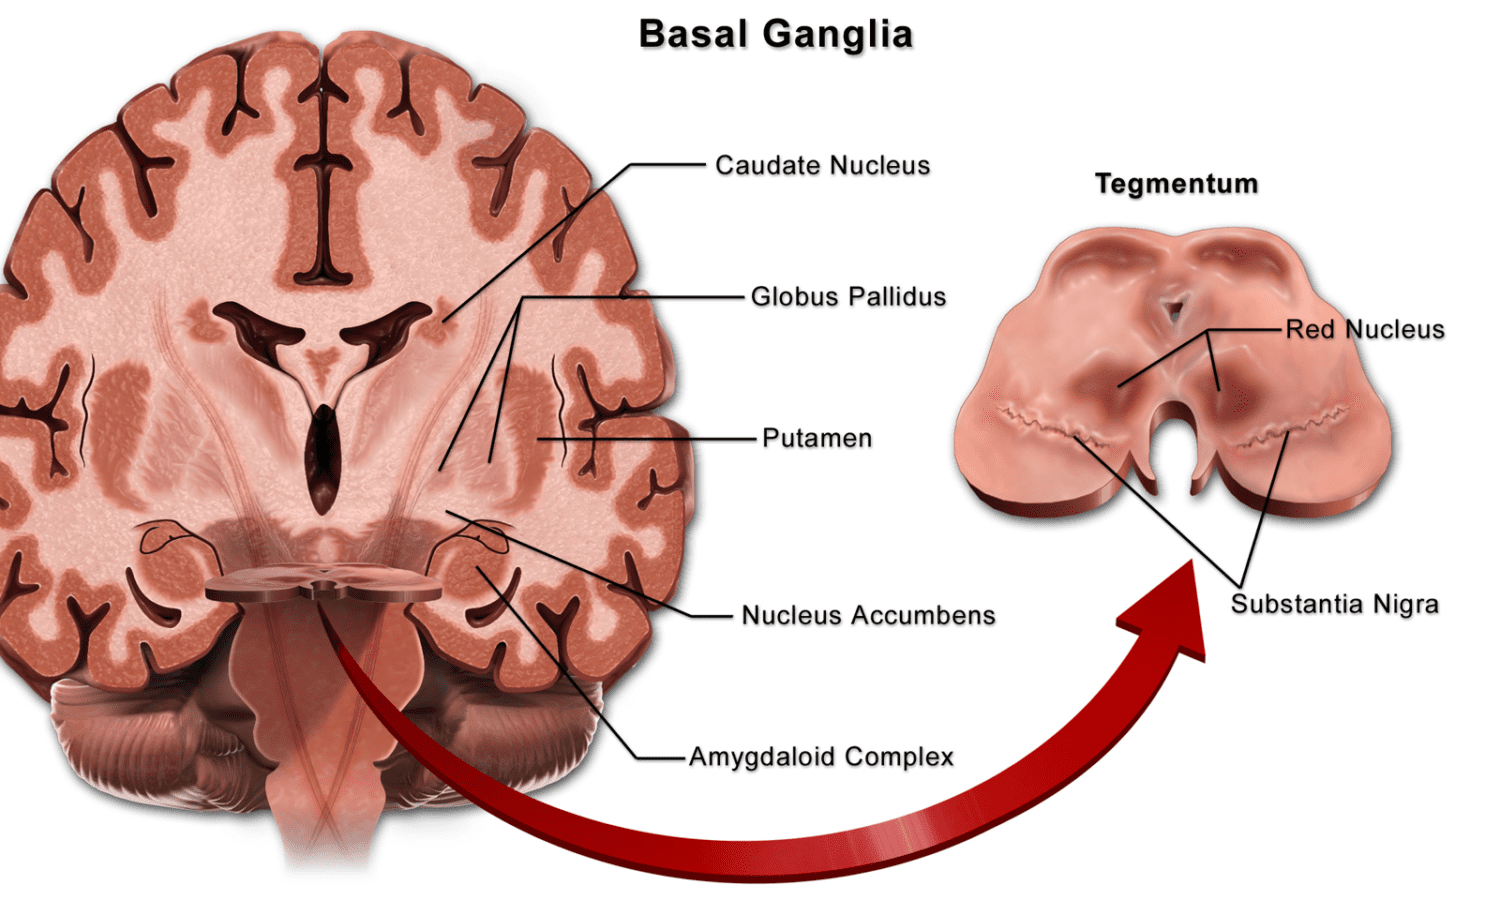 Basal ganglia and infant brain damage - birth injury